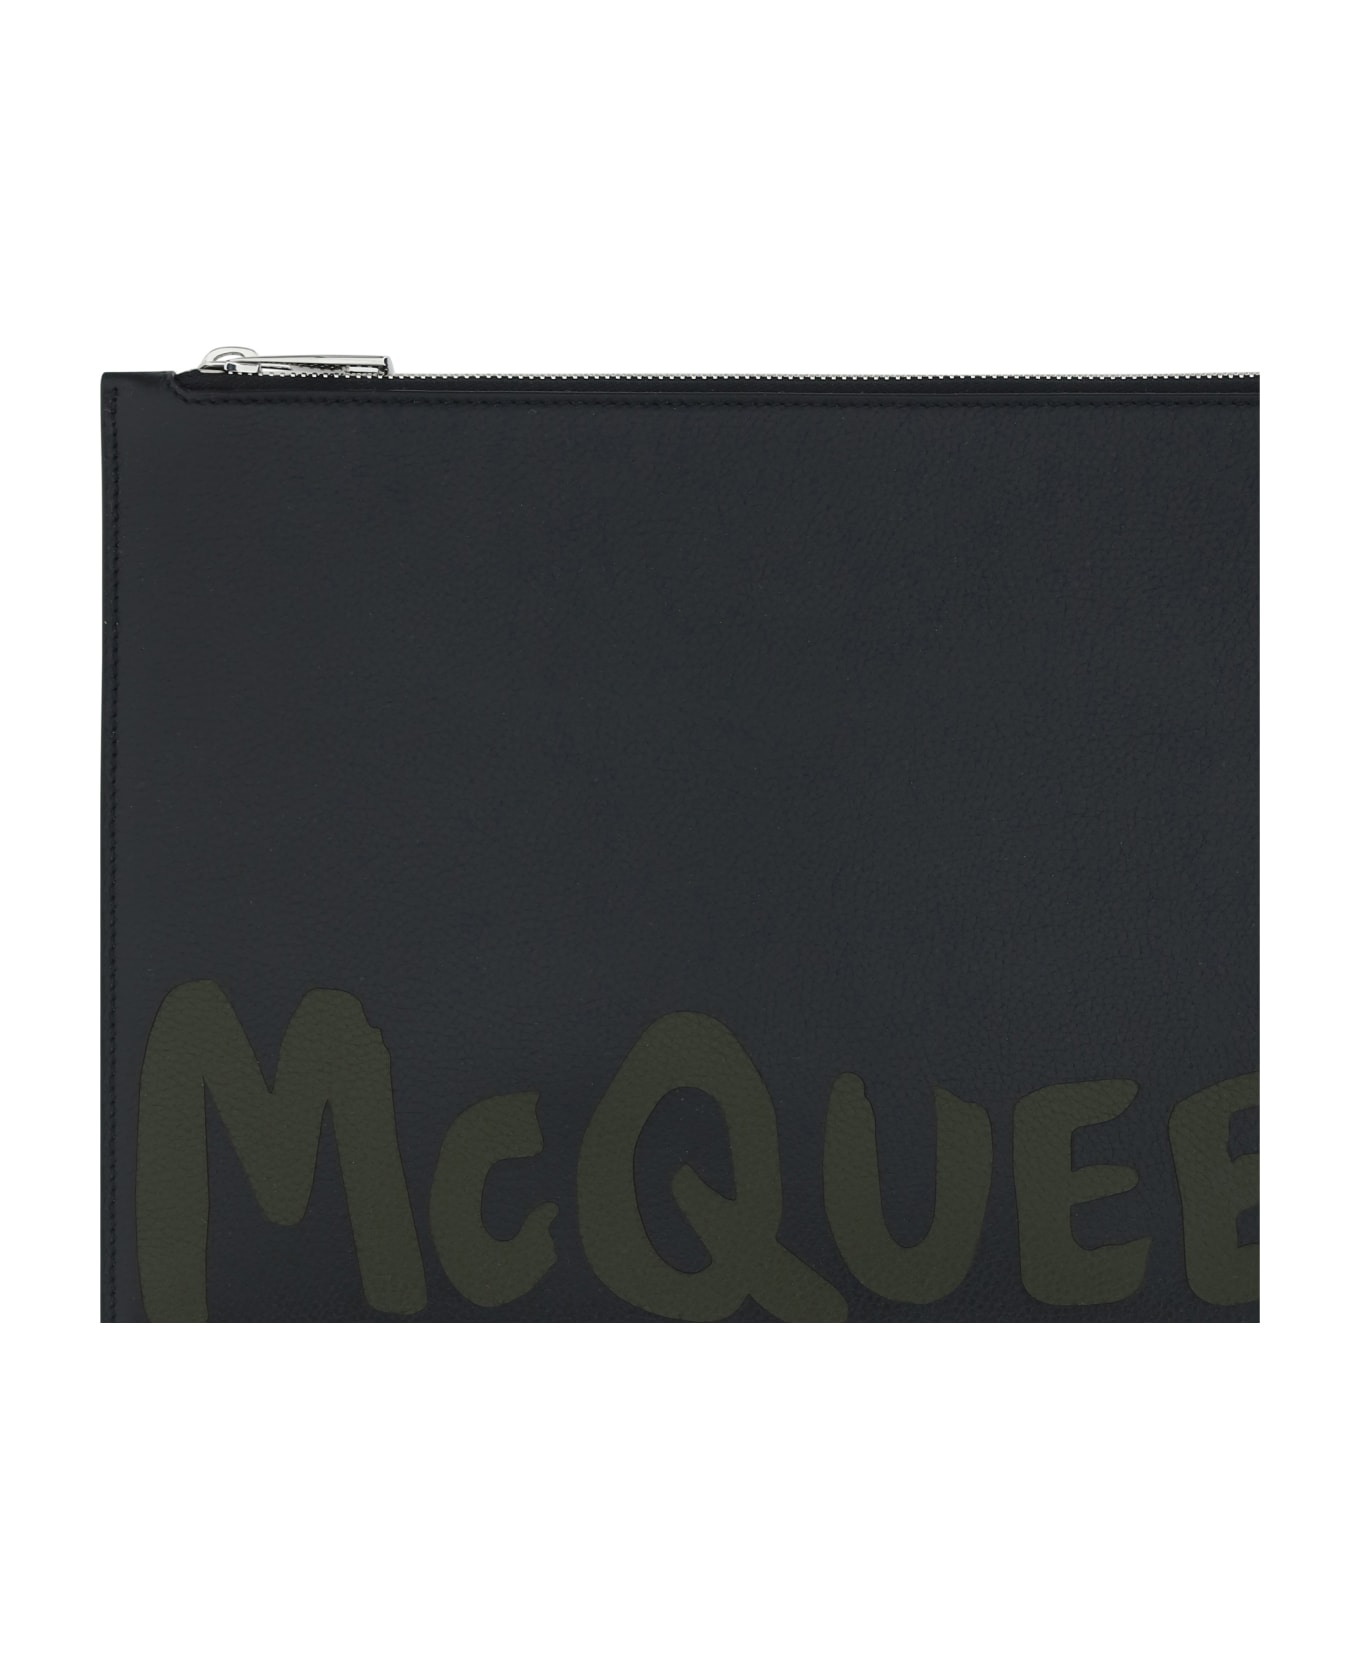 Alexander McQueen Clutch Bag - Black/khaki バッグ